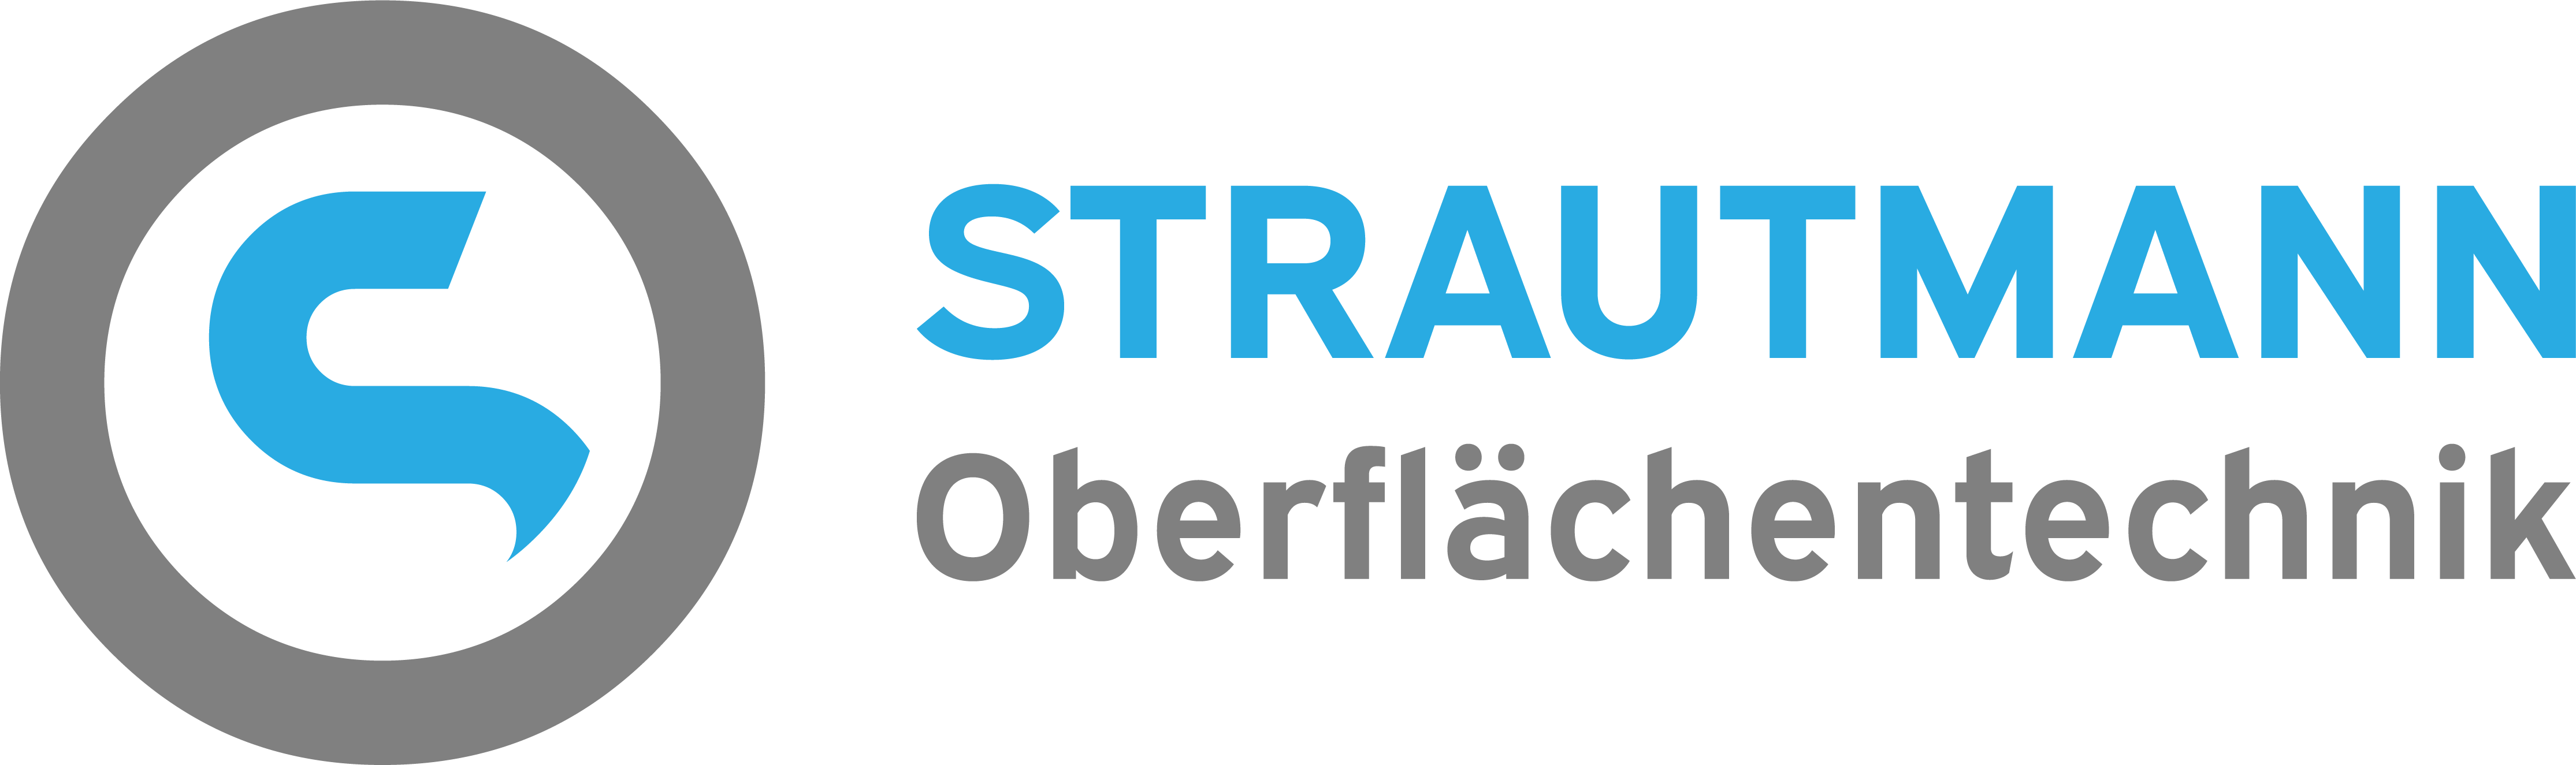 Logo_Strautmann_Oberflächentechnik_Sekundaer